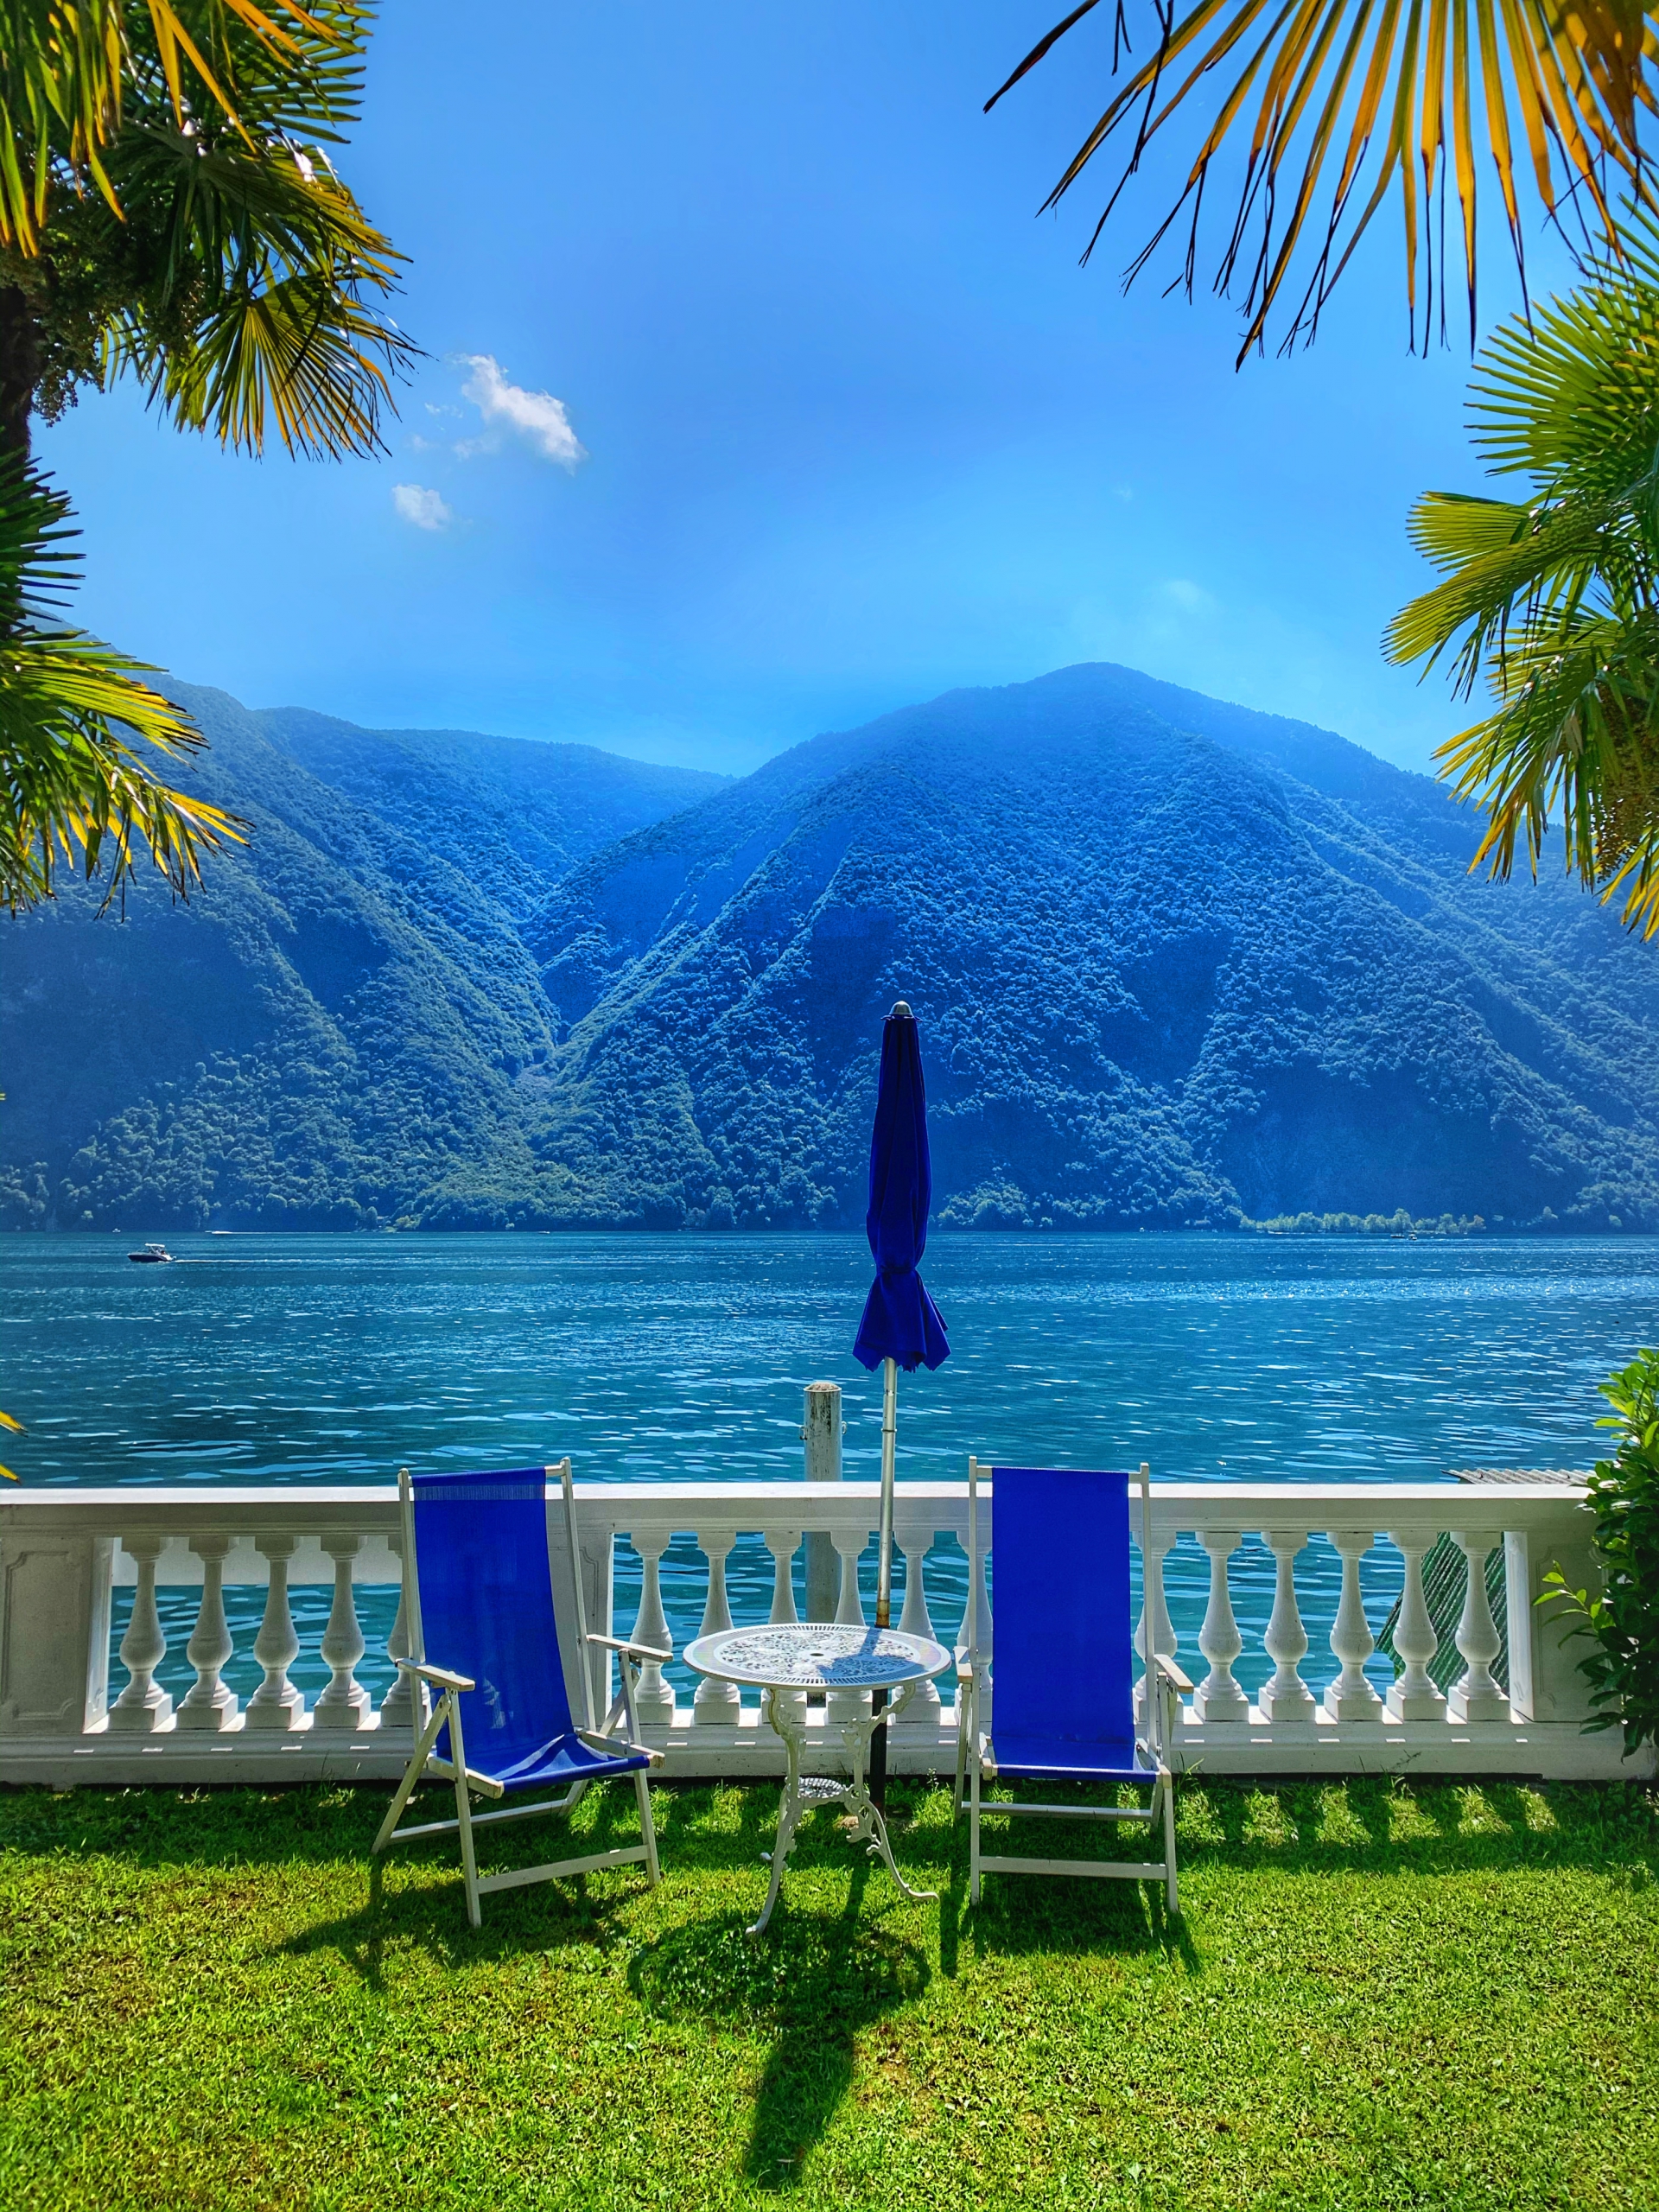 Day trip to Lake Lugano – Switzerland